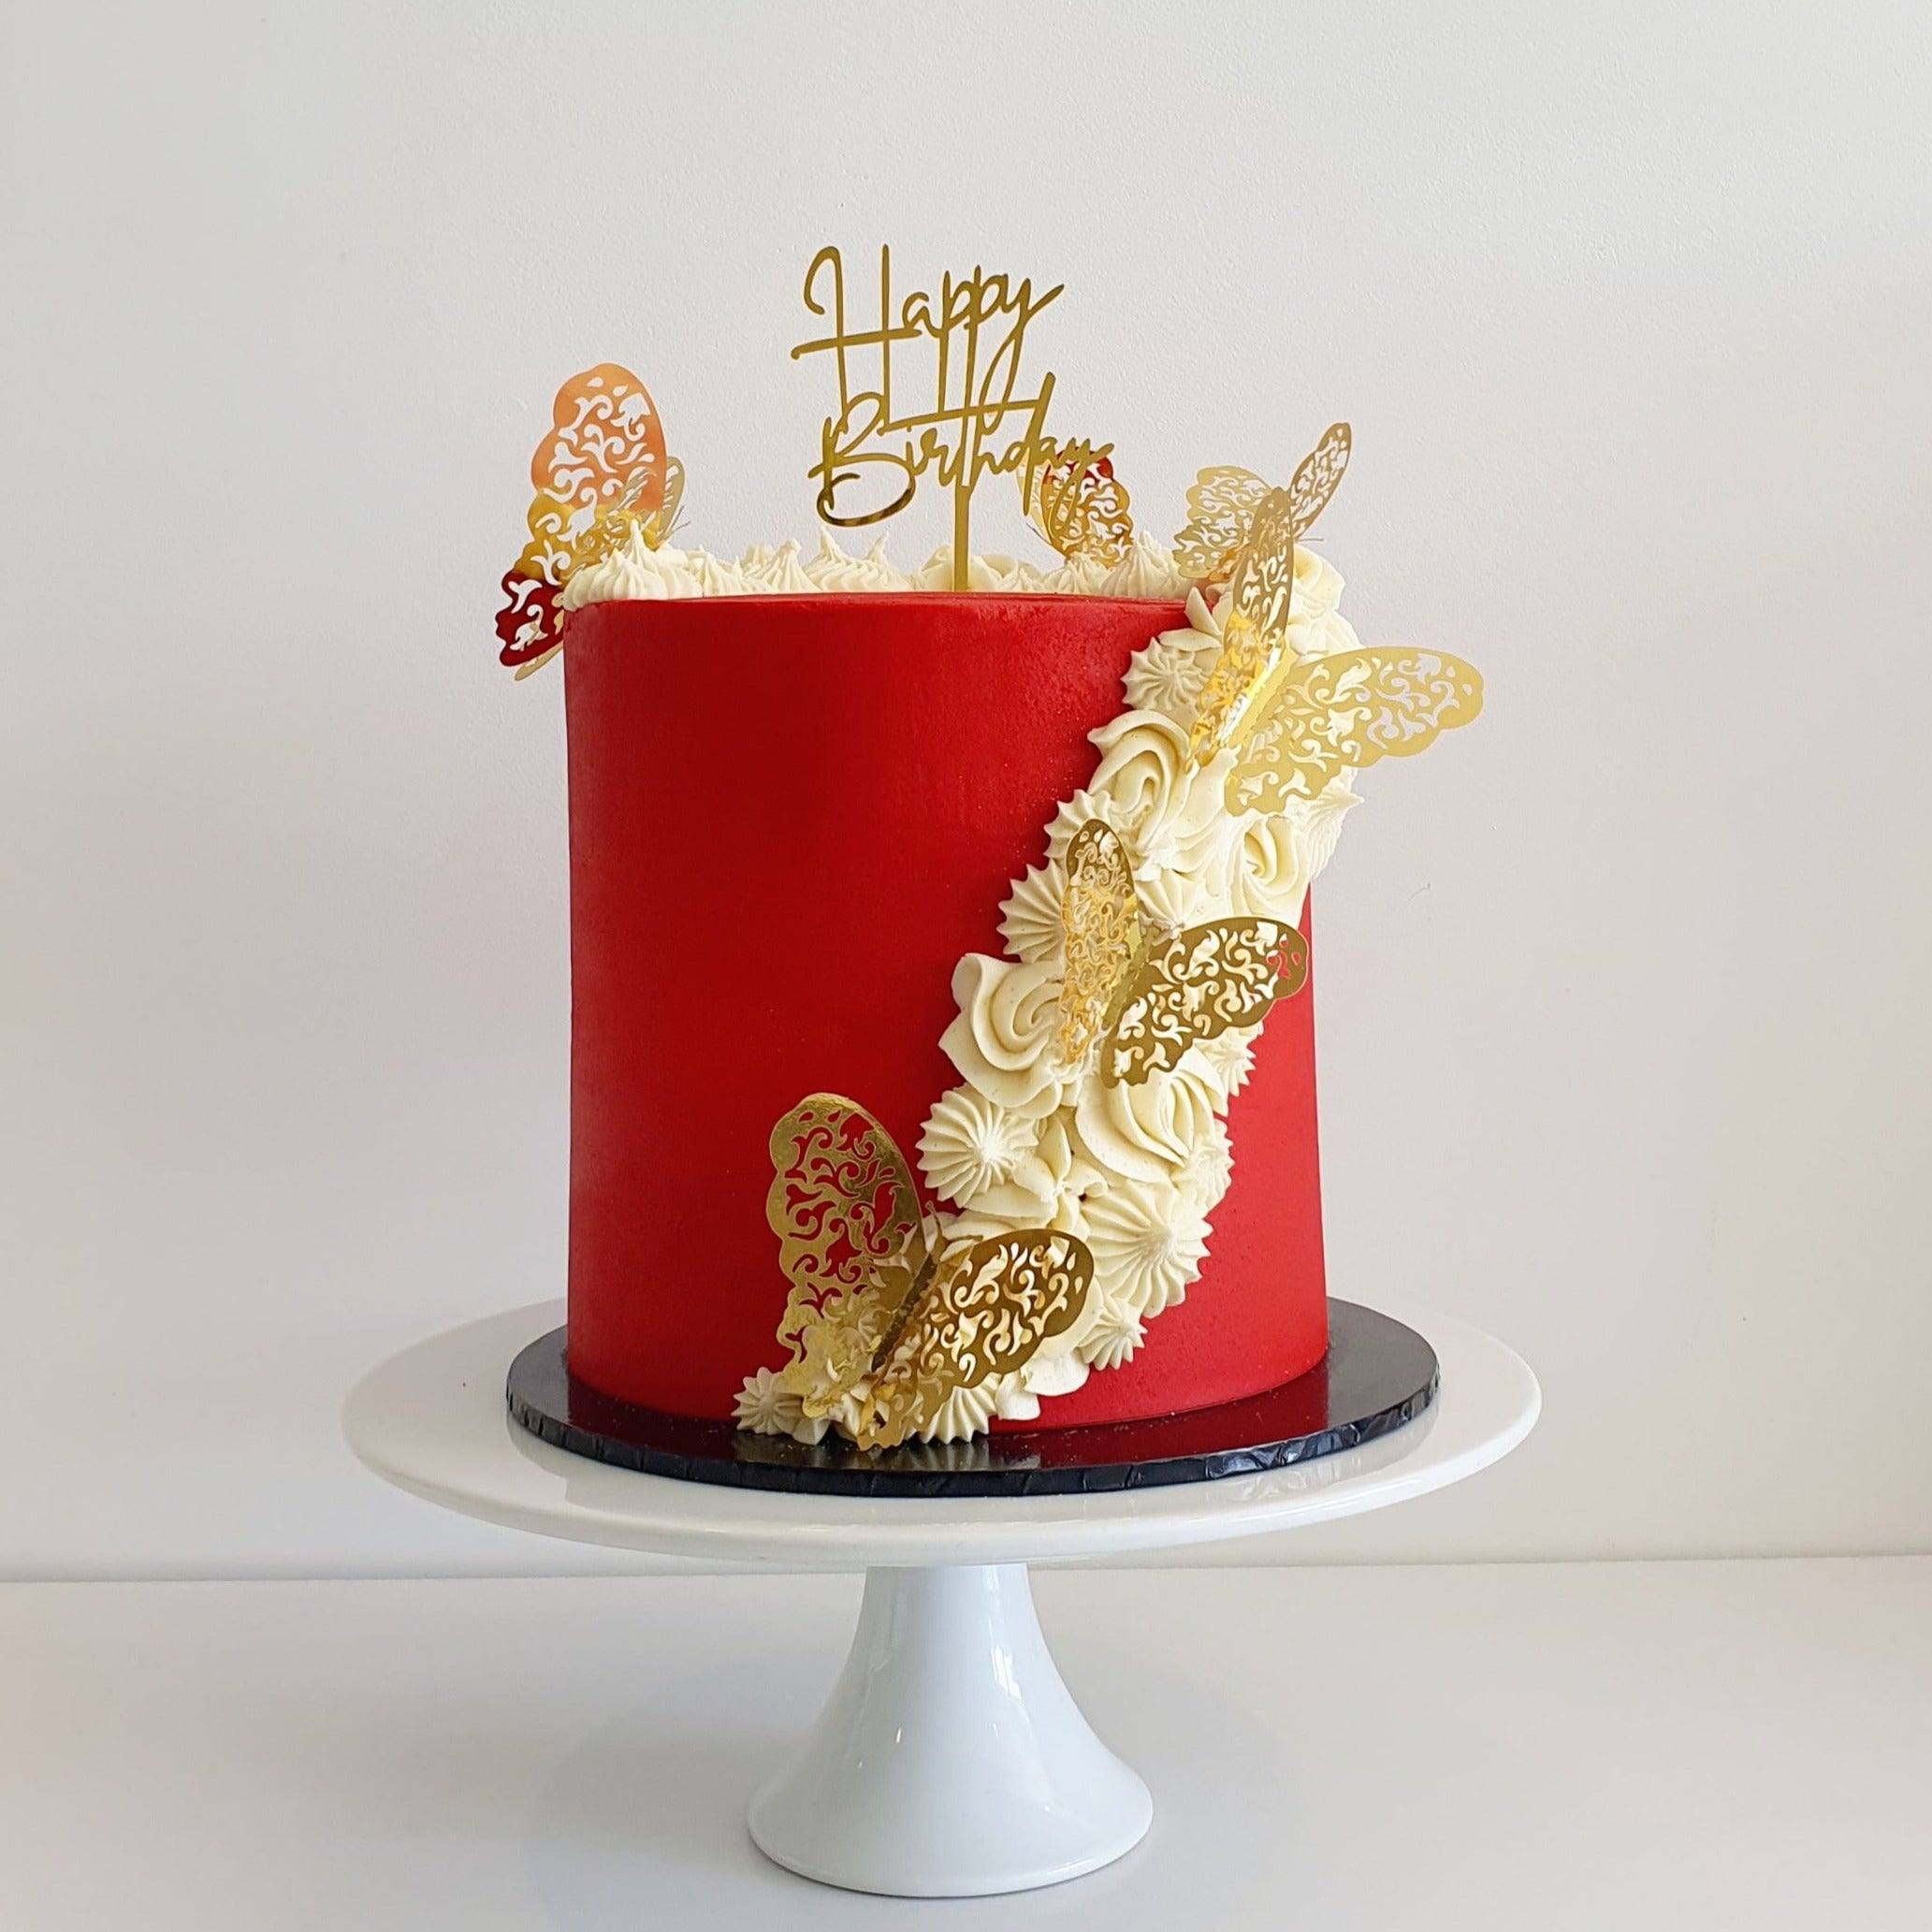 Cake Decorating Basics: Easy Double Barrel – Sugar Geek Show